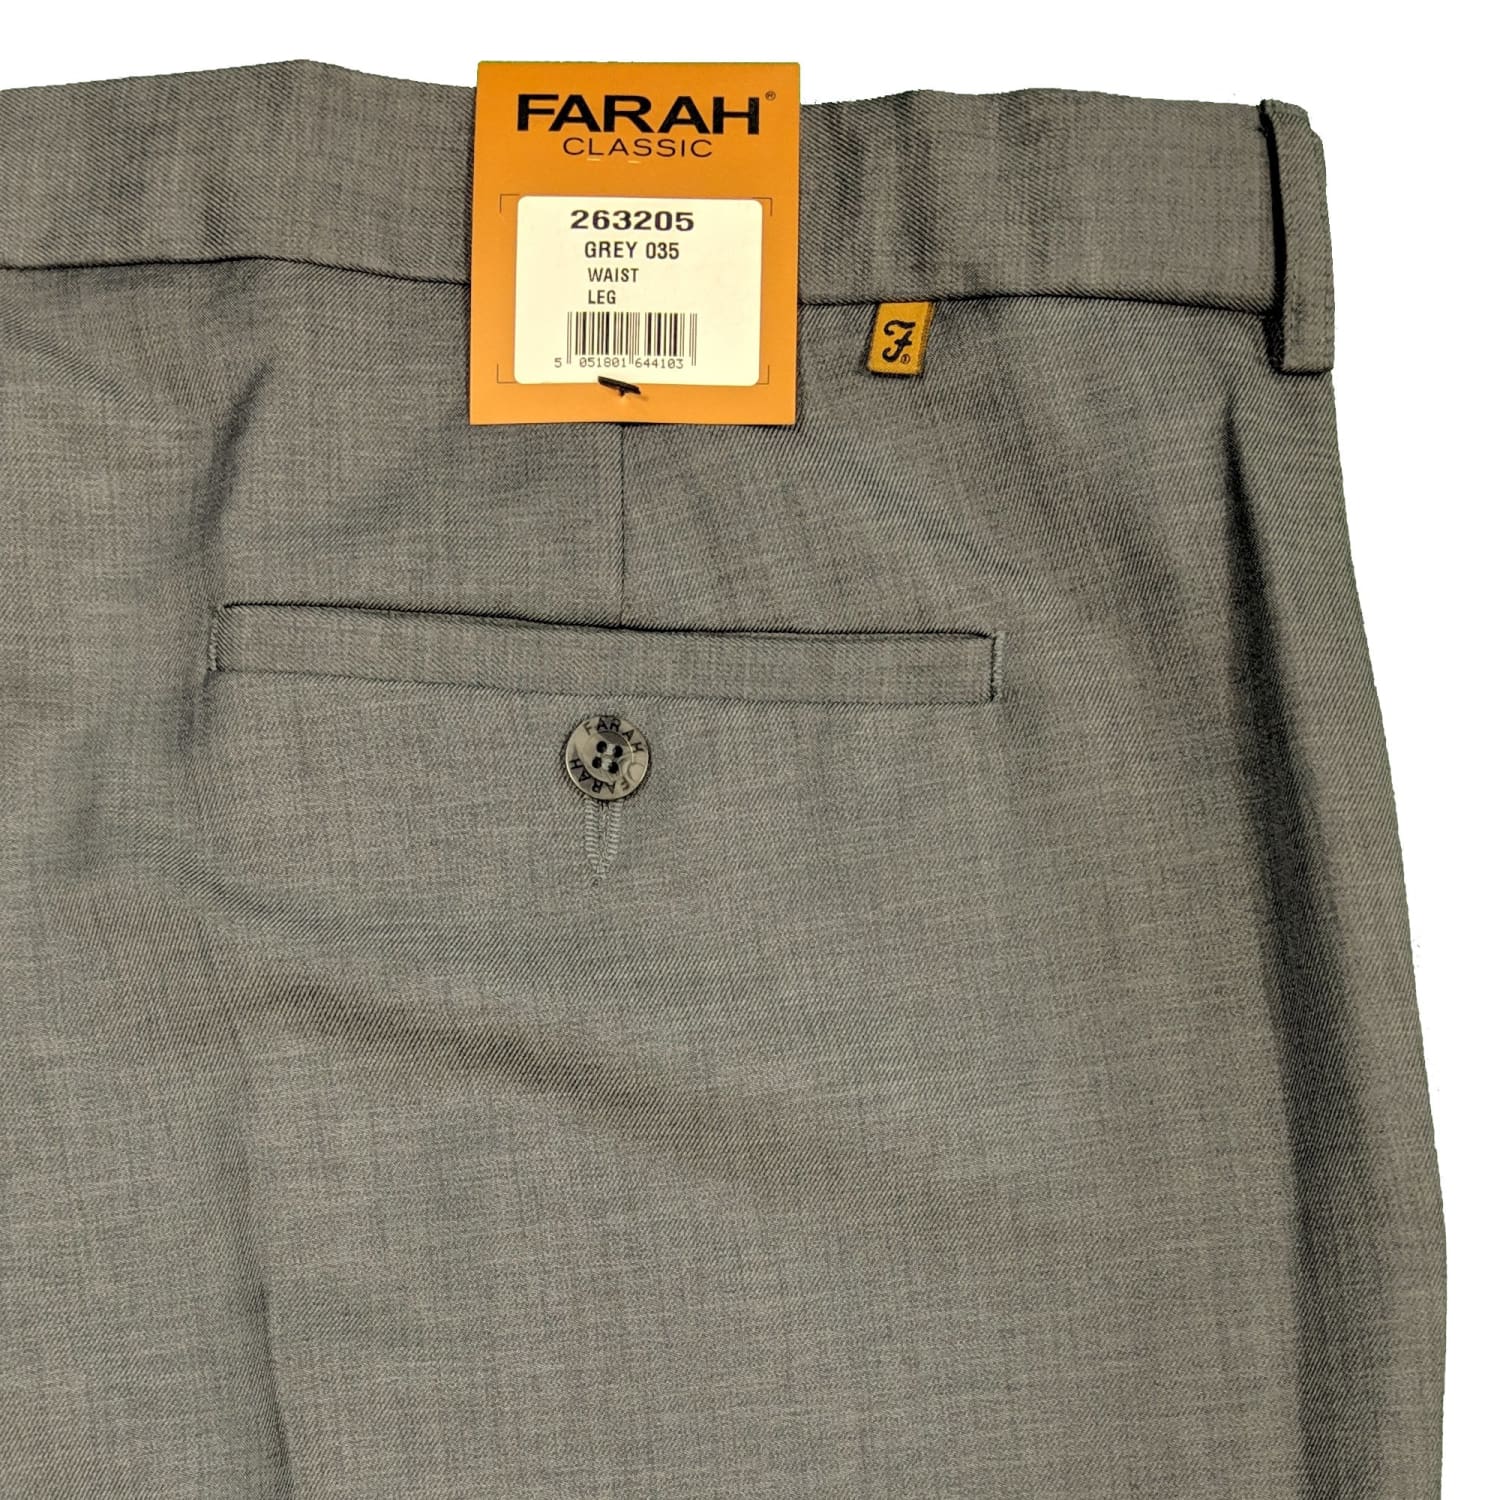 farah trousers 263205 grey 1 back pocket 2 front pockets 42 48